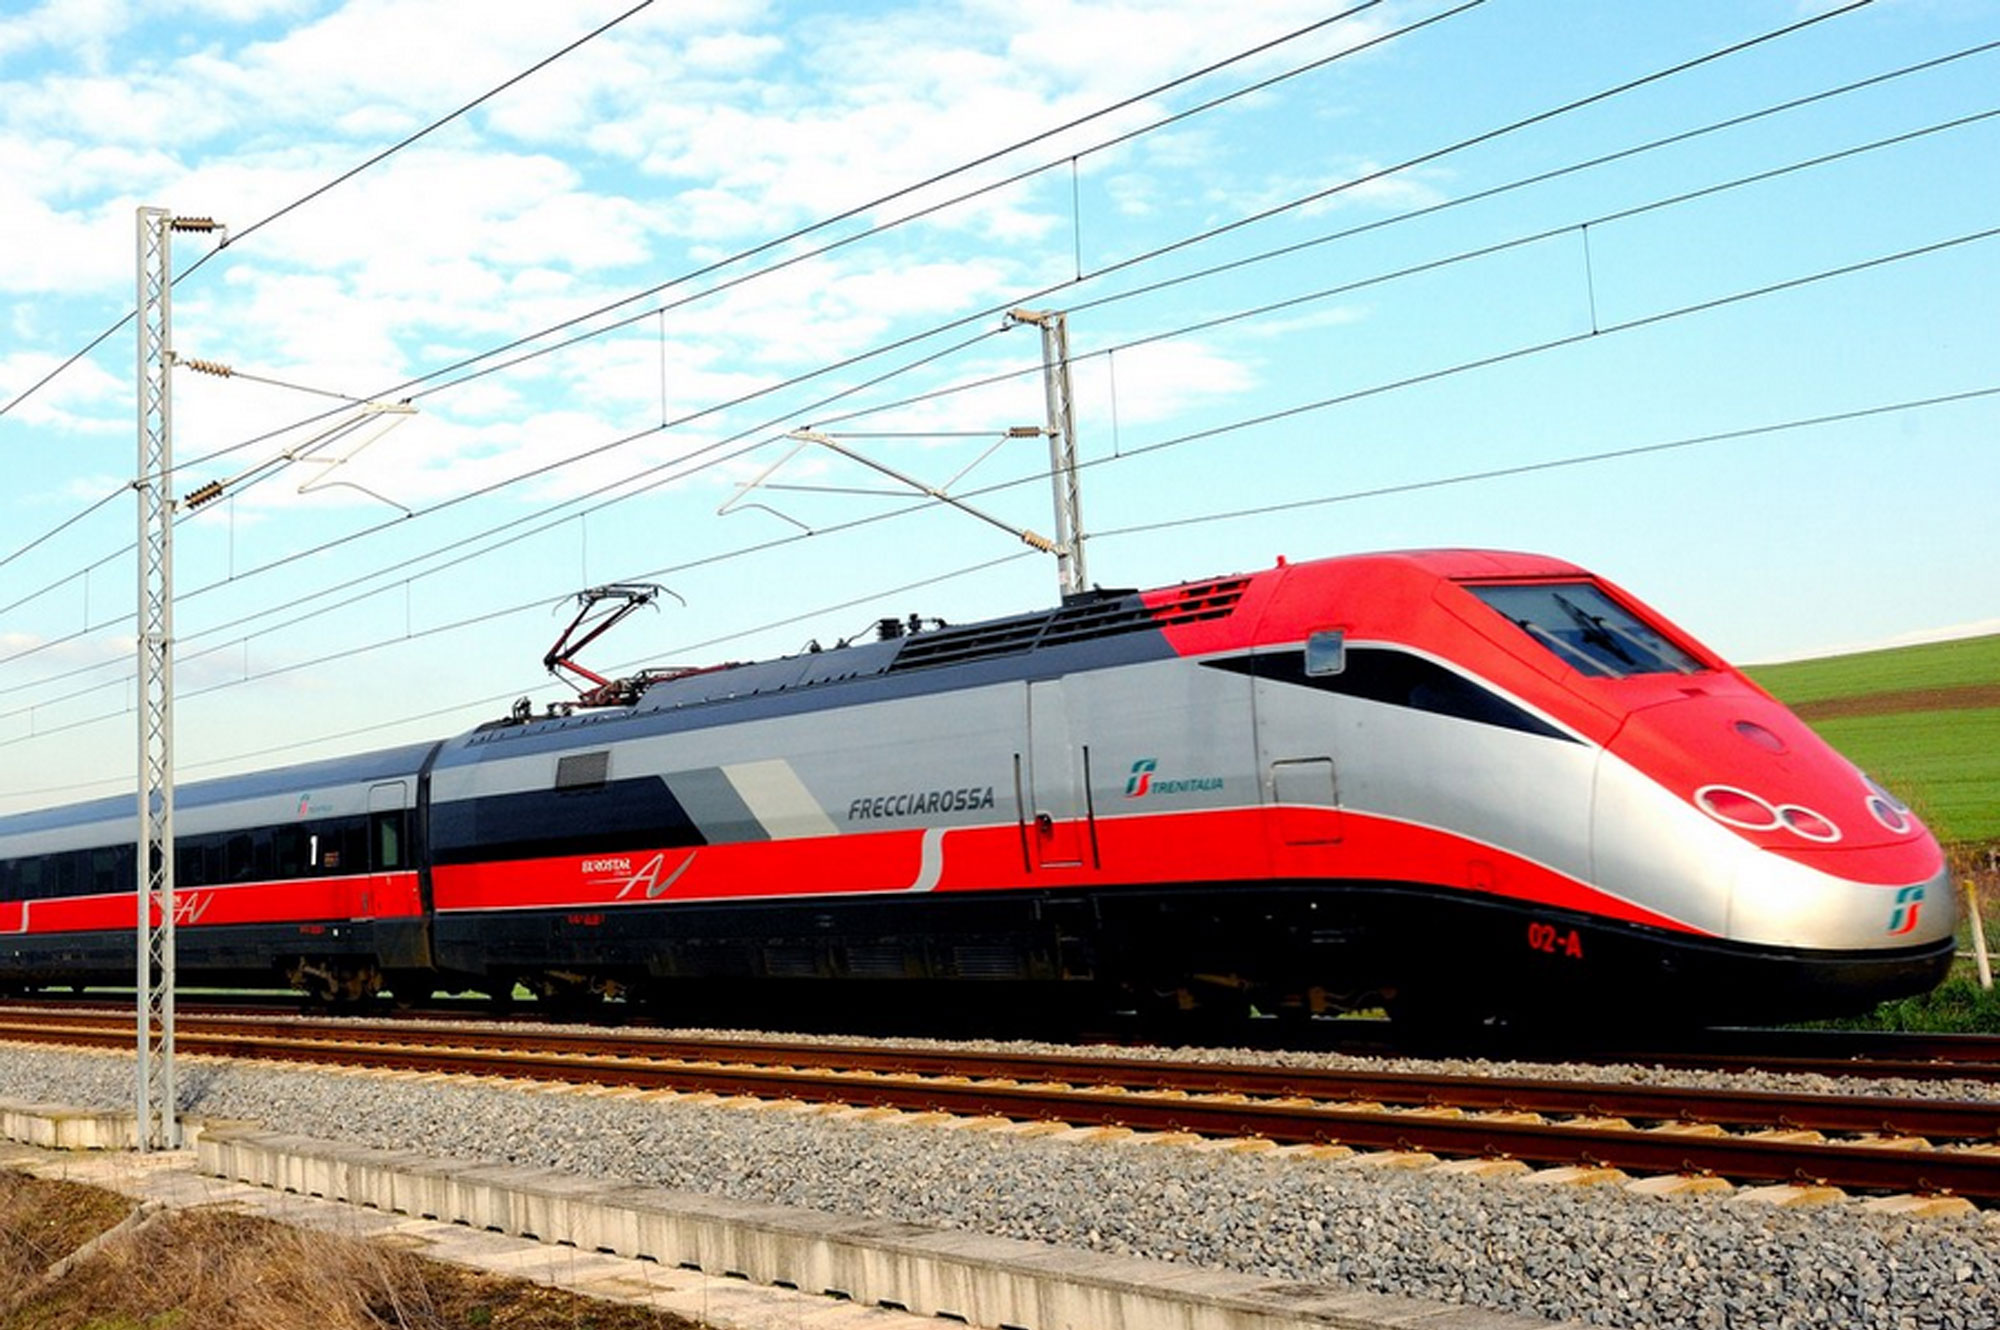 Turin-Milan and Milan-Naples high capacity rail lines, Italy